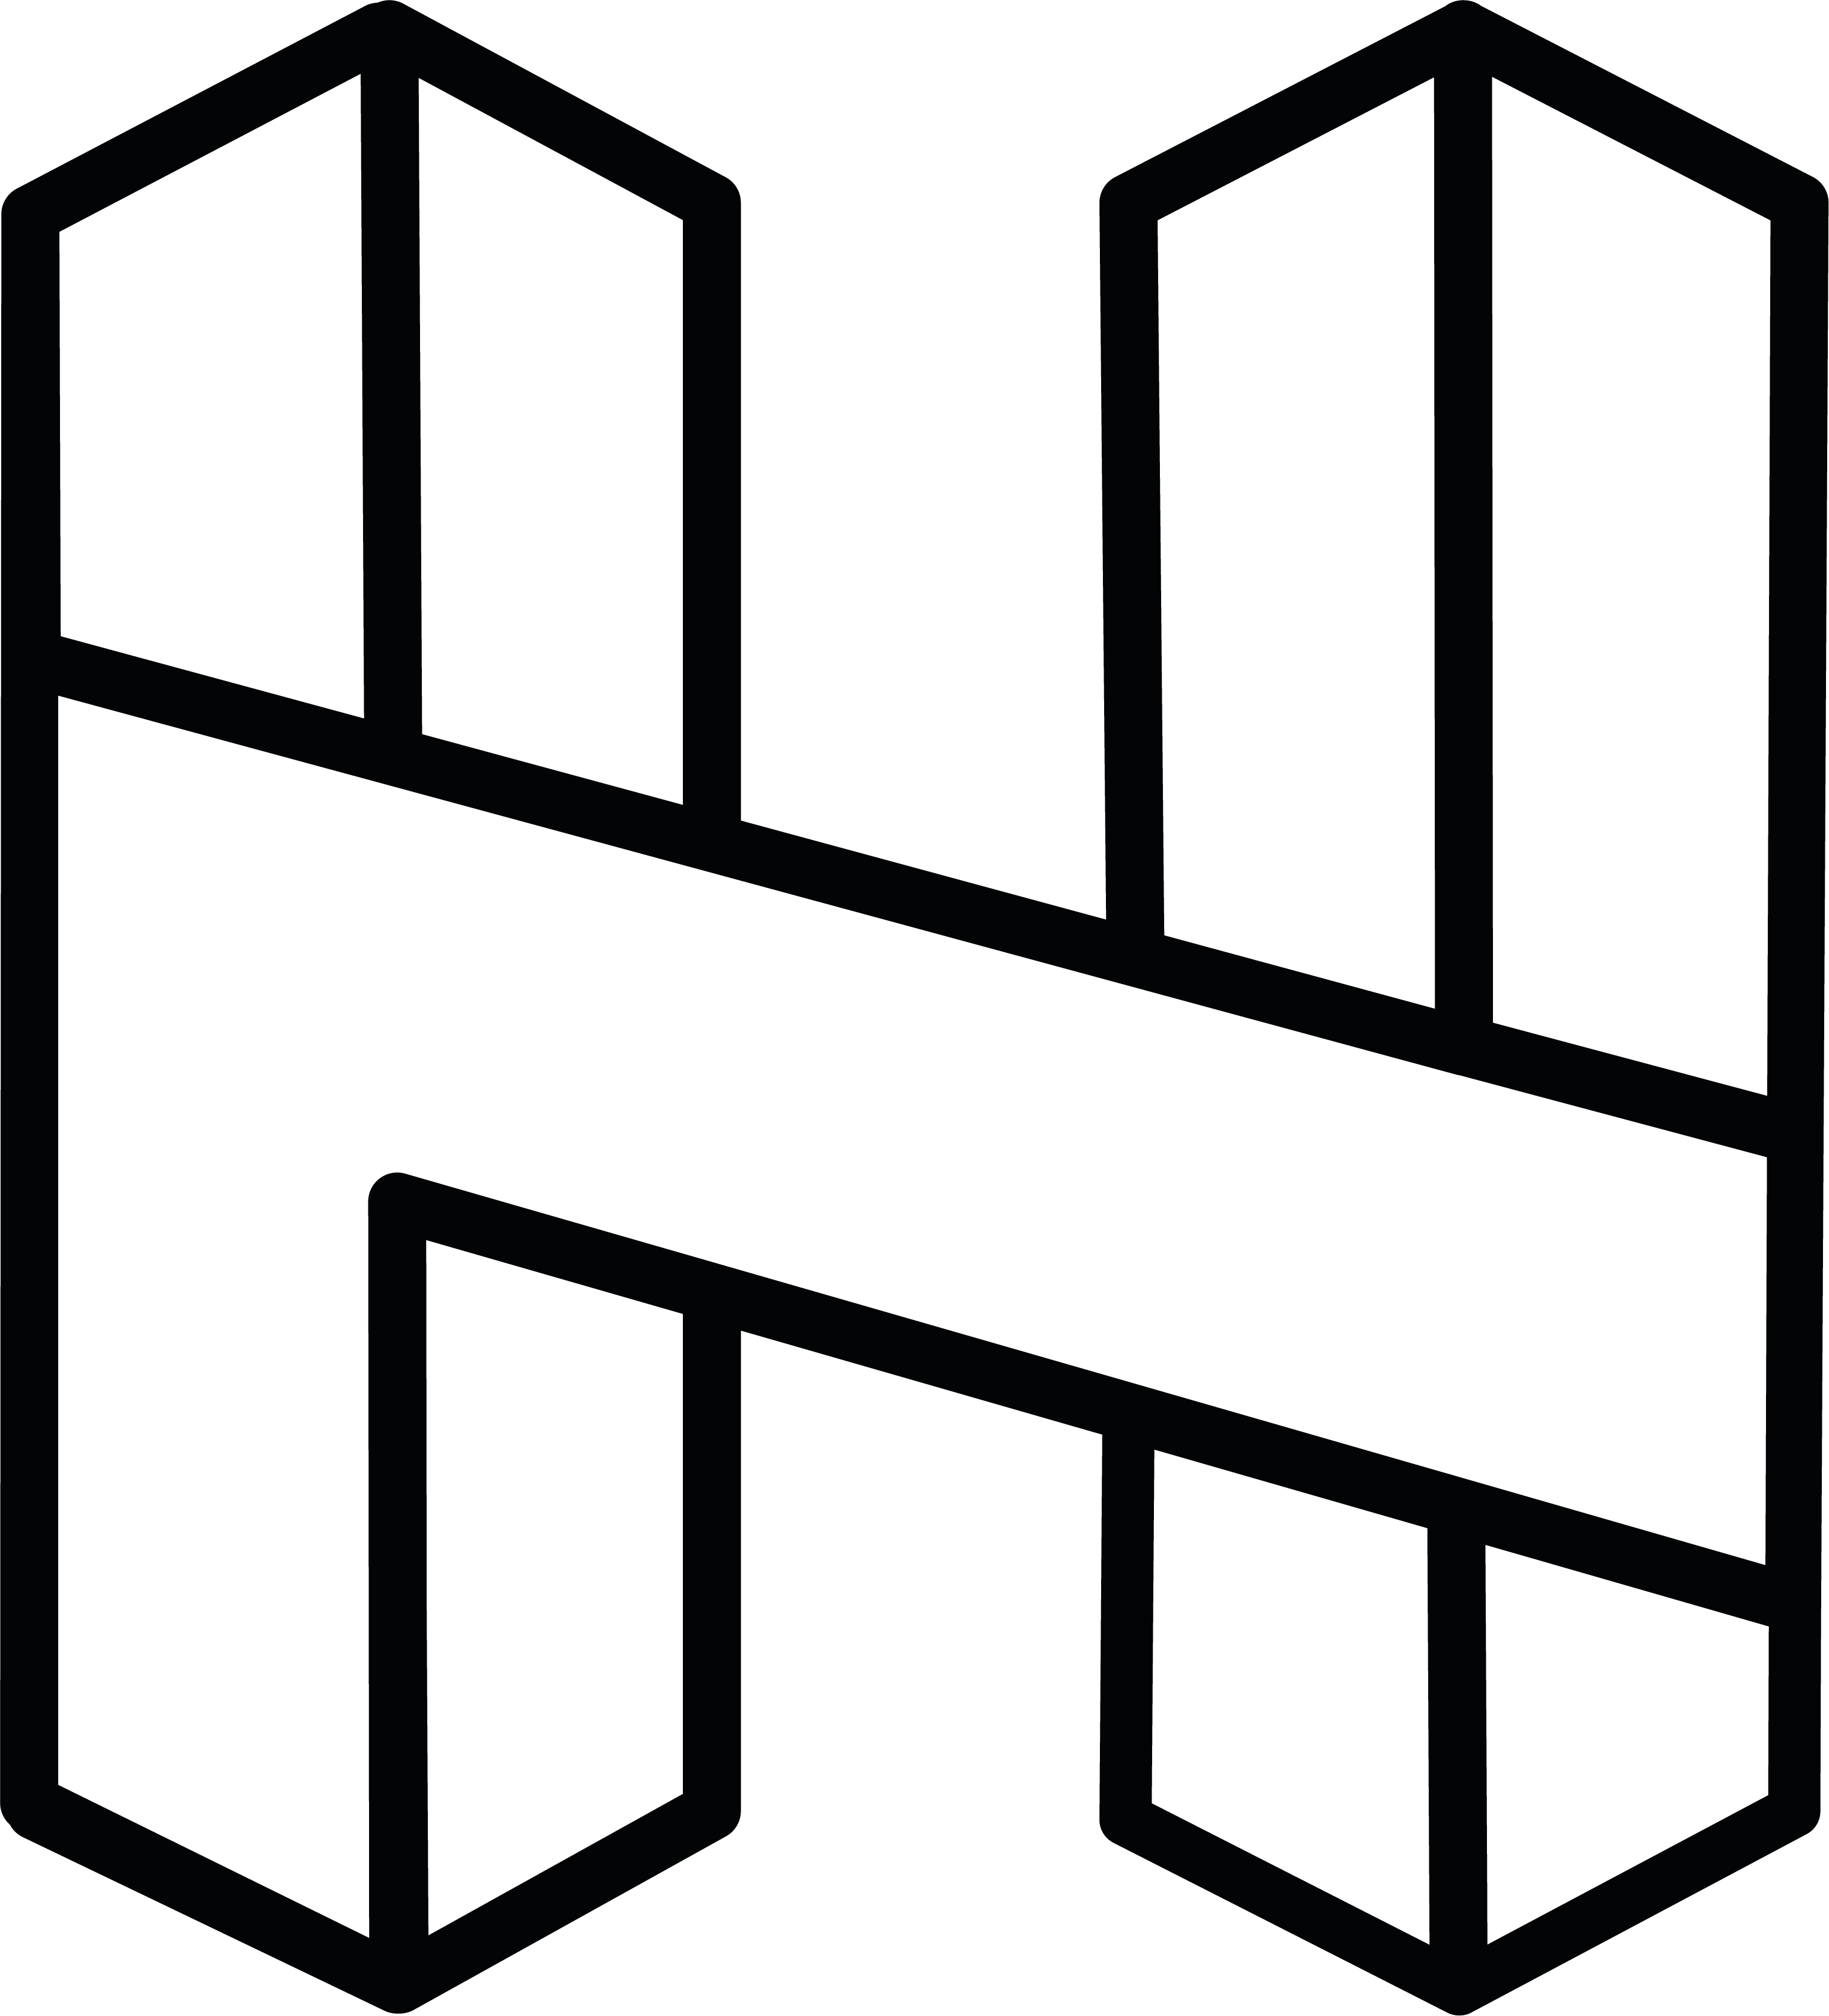 h7-logo-copie